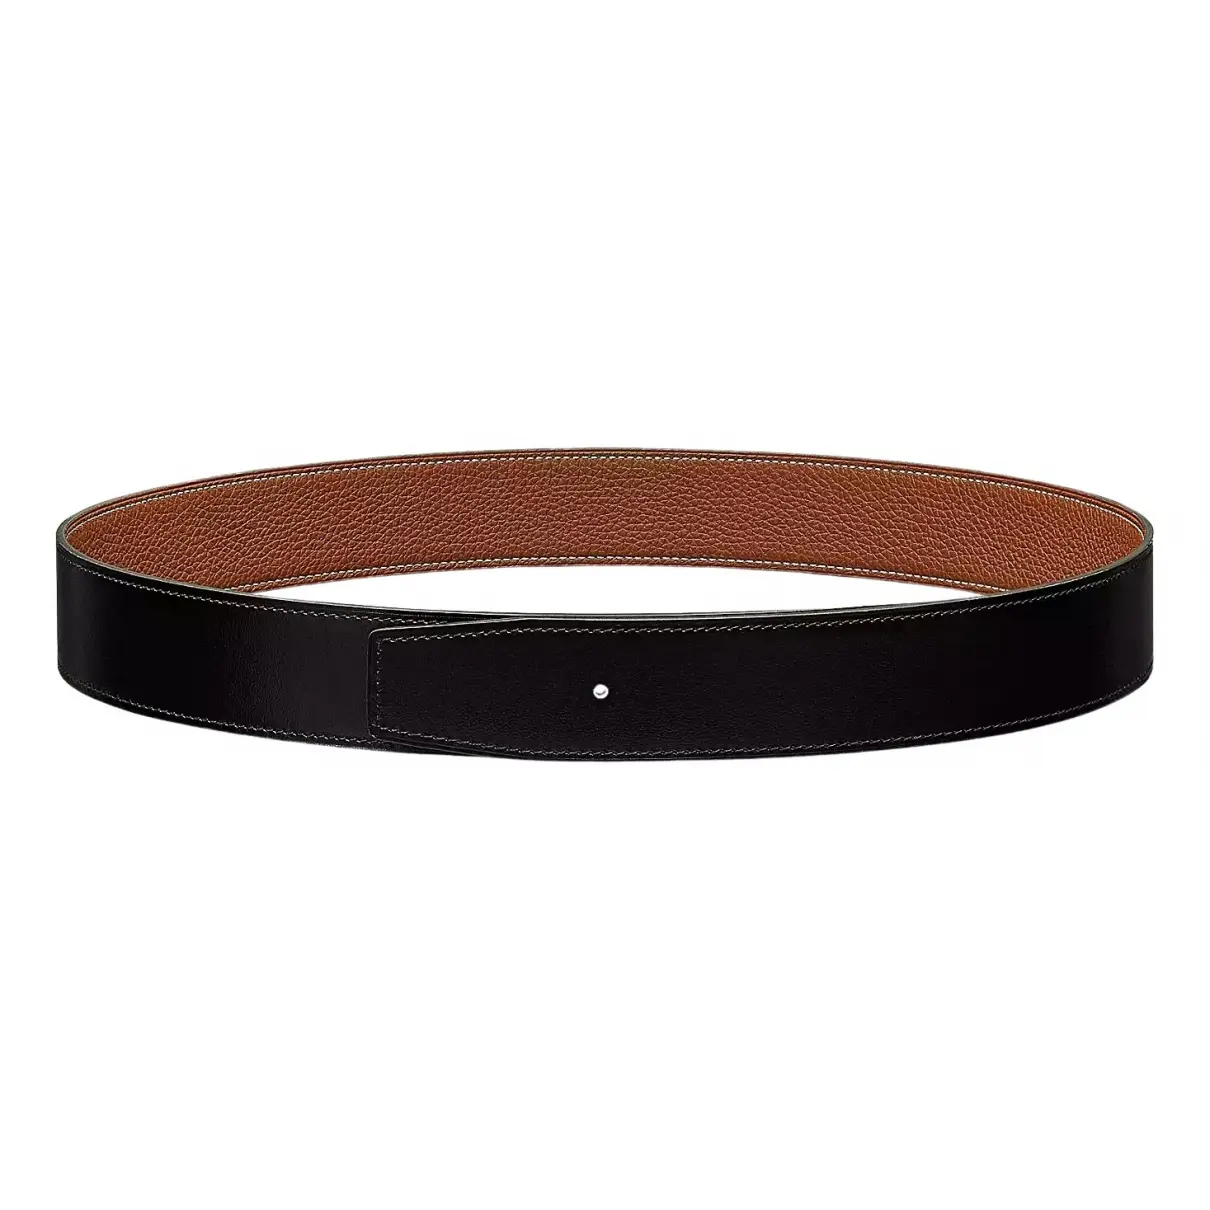 Cuir seul / Leather Strap leather belt